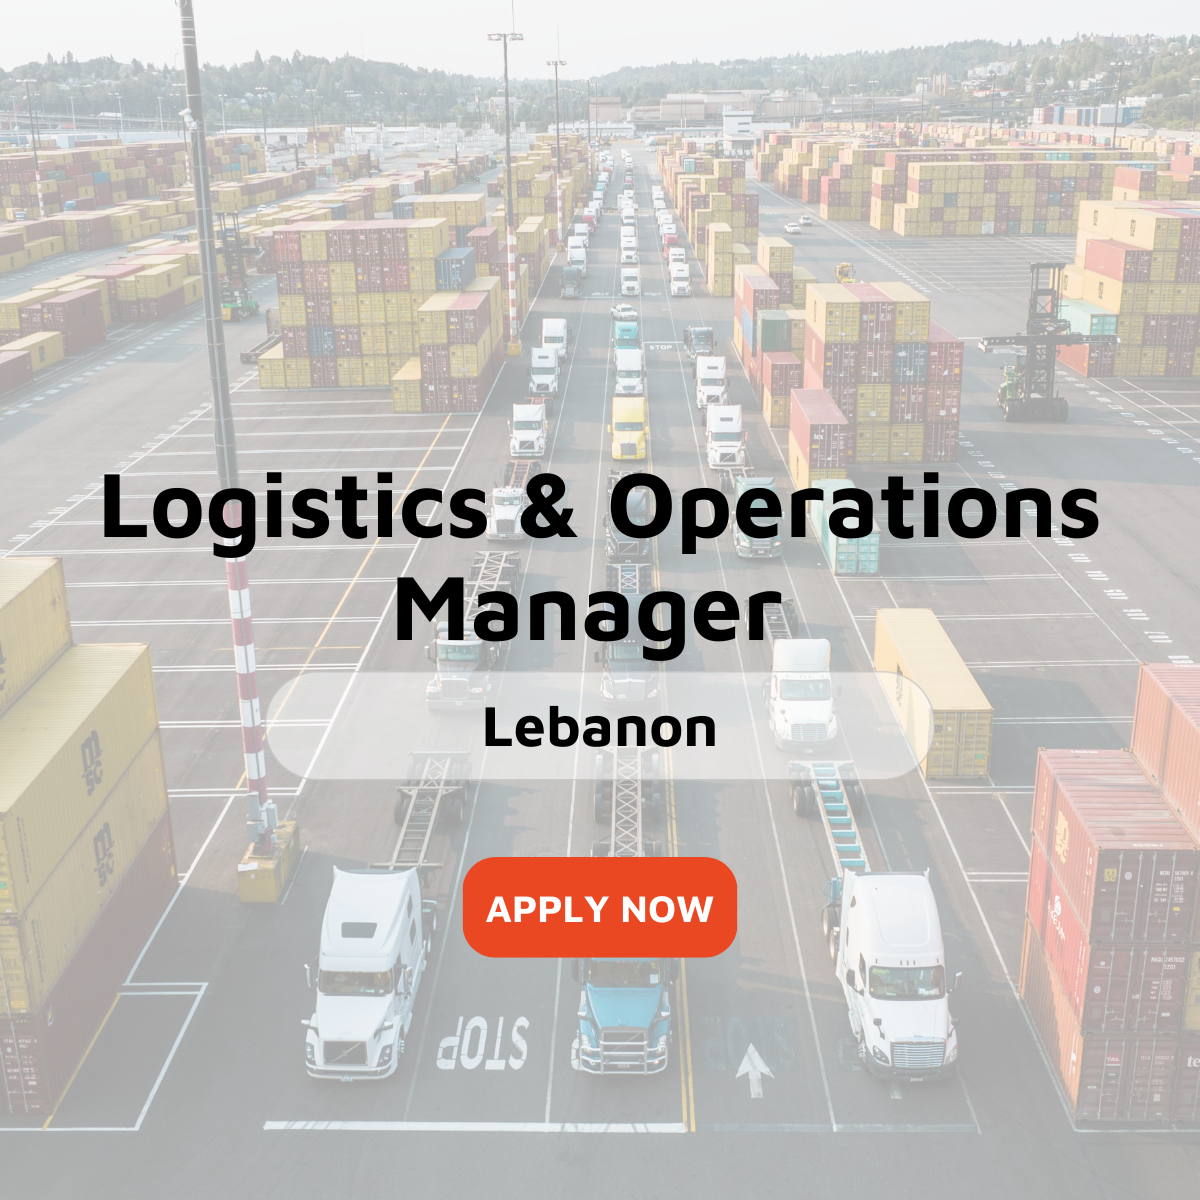 Logistics & Operations Manager